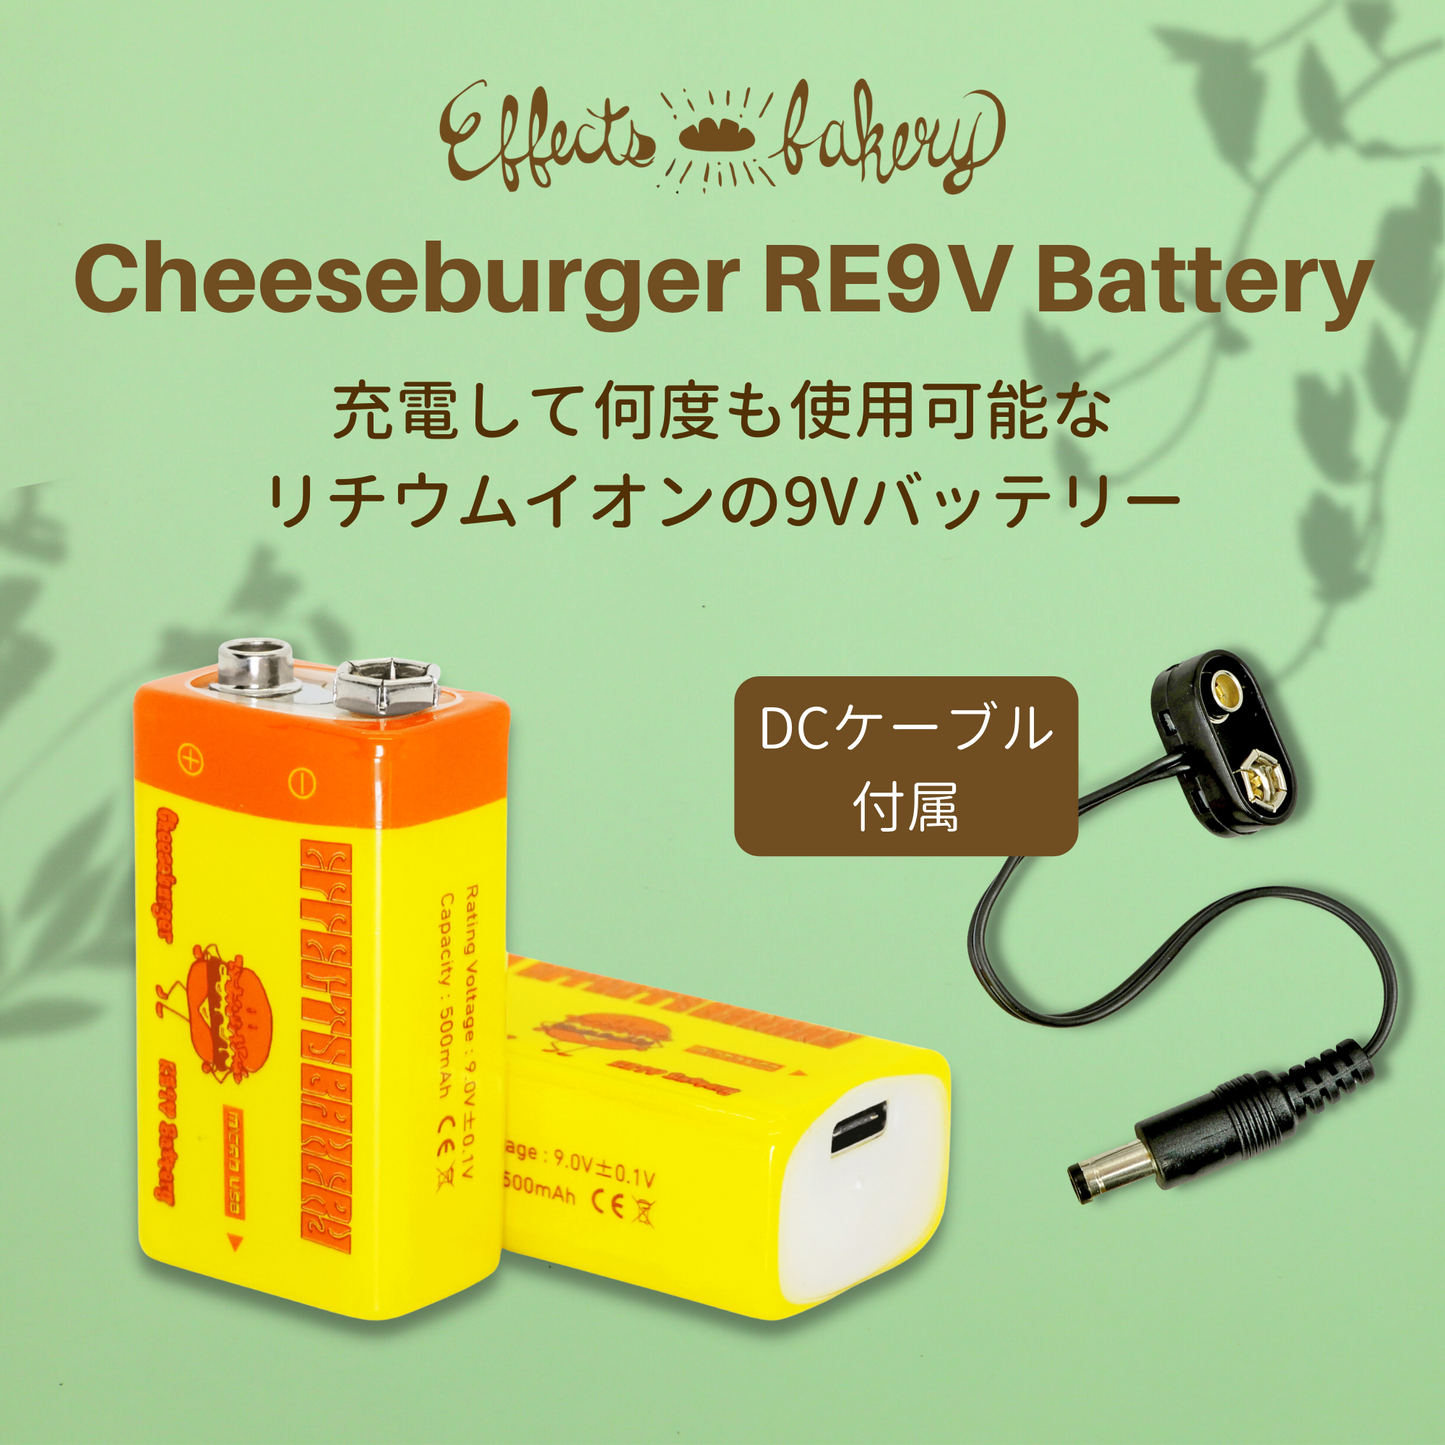 Effects Bakery Cheeseburger RE9V Battery